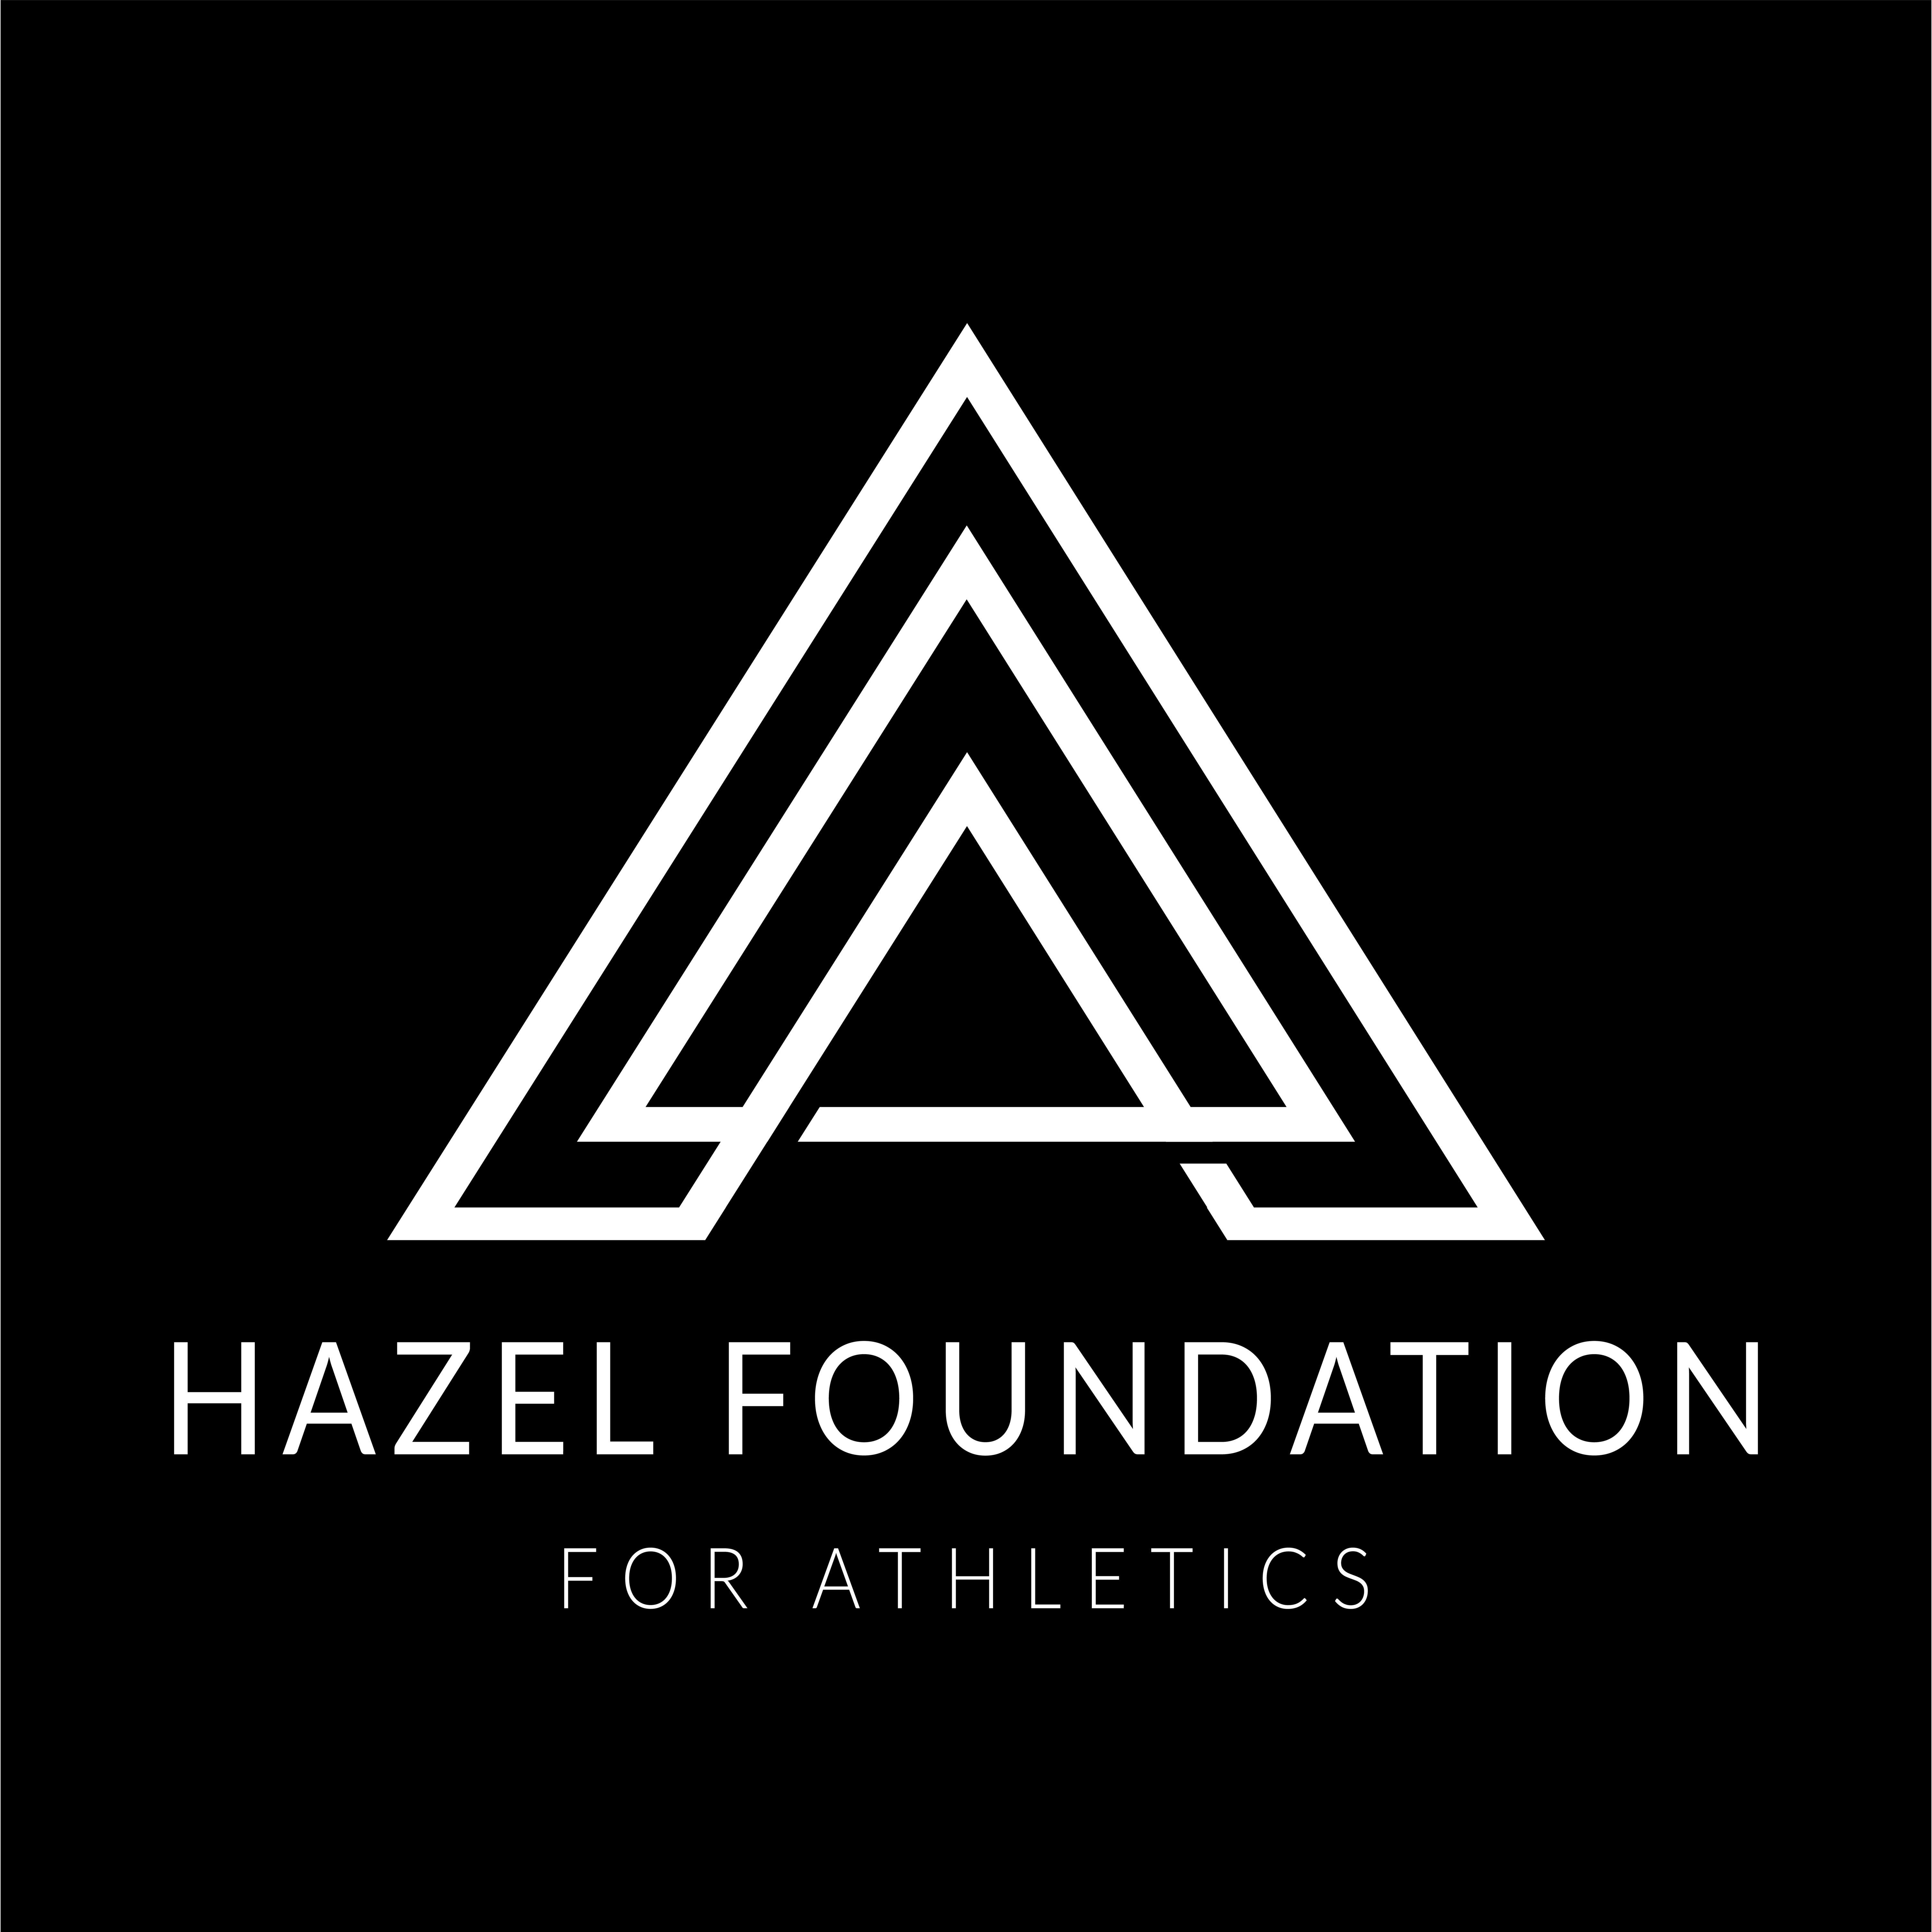 Hazel Logo - Hazel Foundation logo - FLASH FOXY